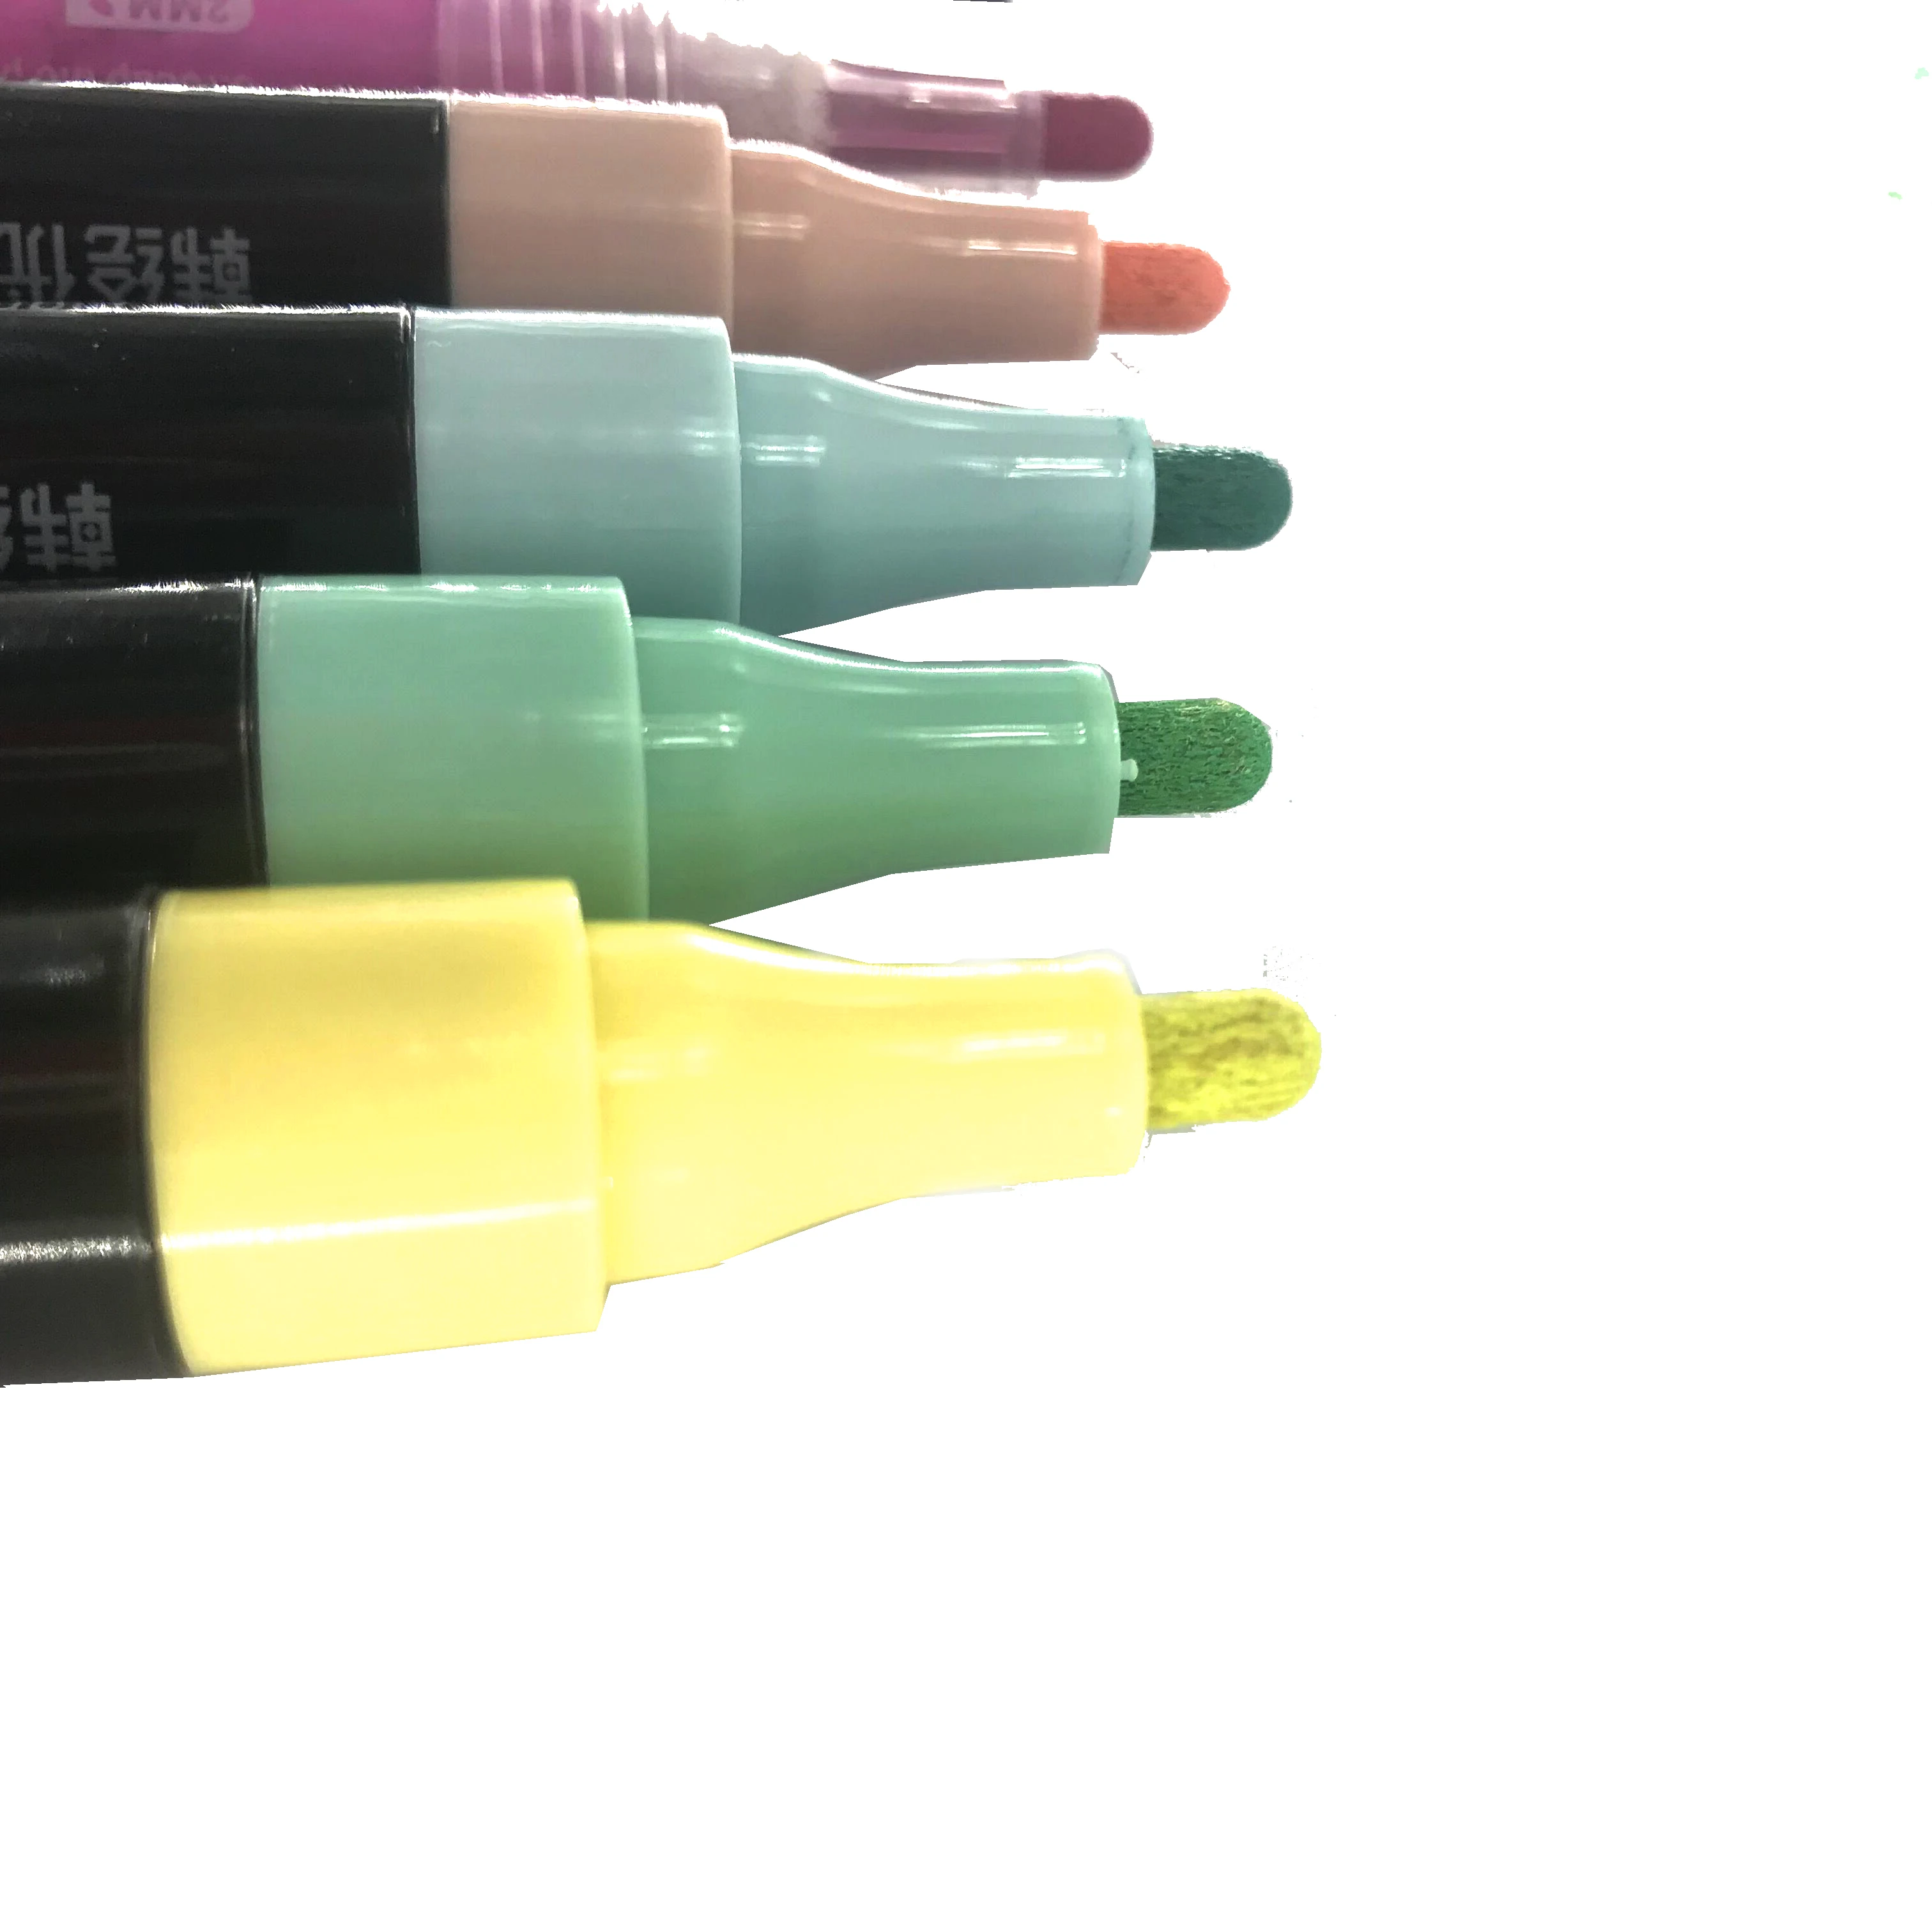 Acrylic Paint Pens Markers - 18 Colour Permanent Paint Maker Set, for Wood, Ceramic, Metal, Fabric, Canvas, Paper, Glass,